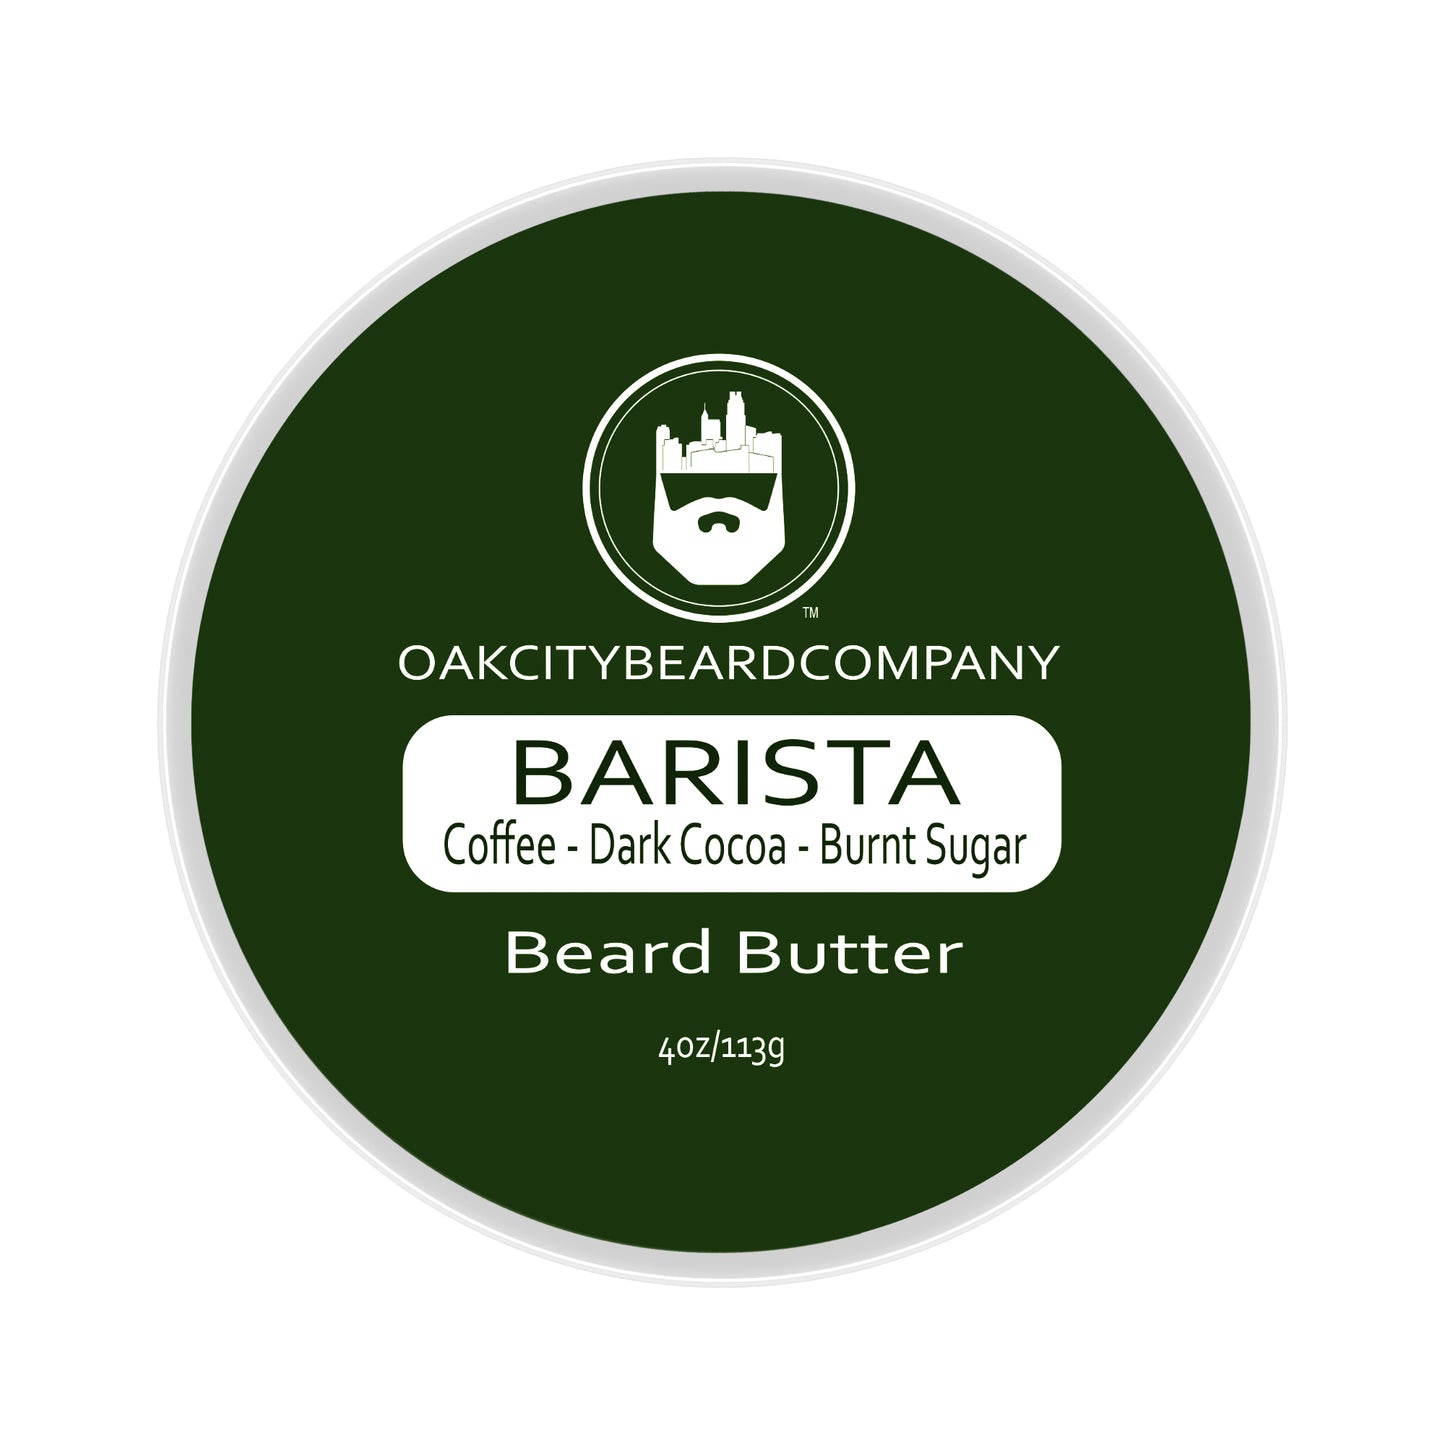 Barista (Beard Butter) by Oak City Beard Company